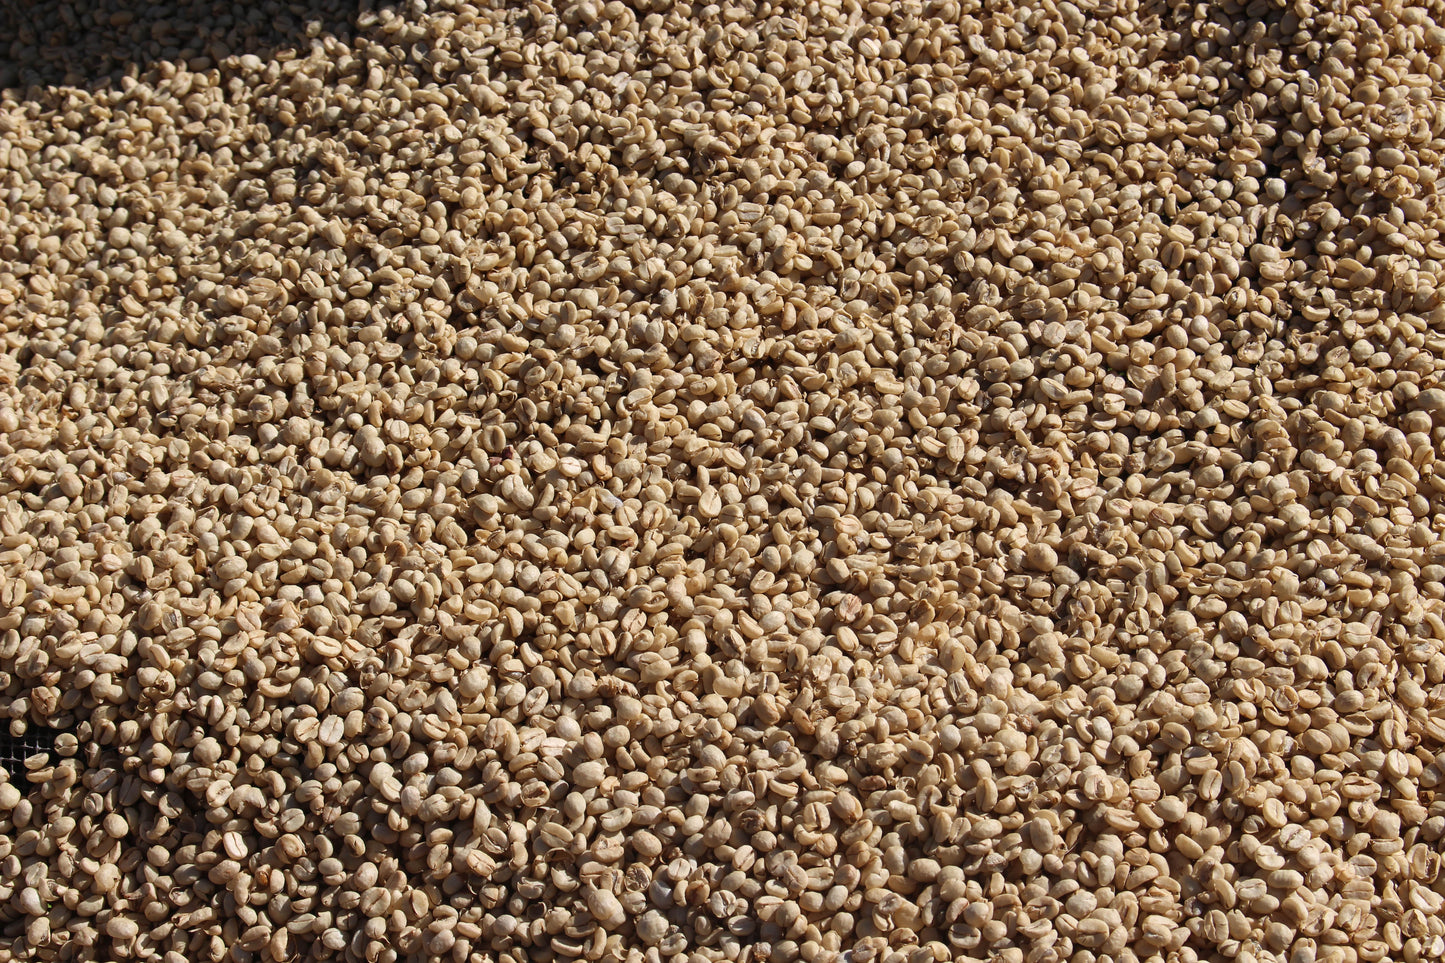 Kenya Kagumoini AB green coffee beans